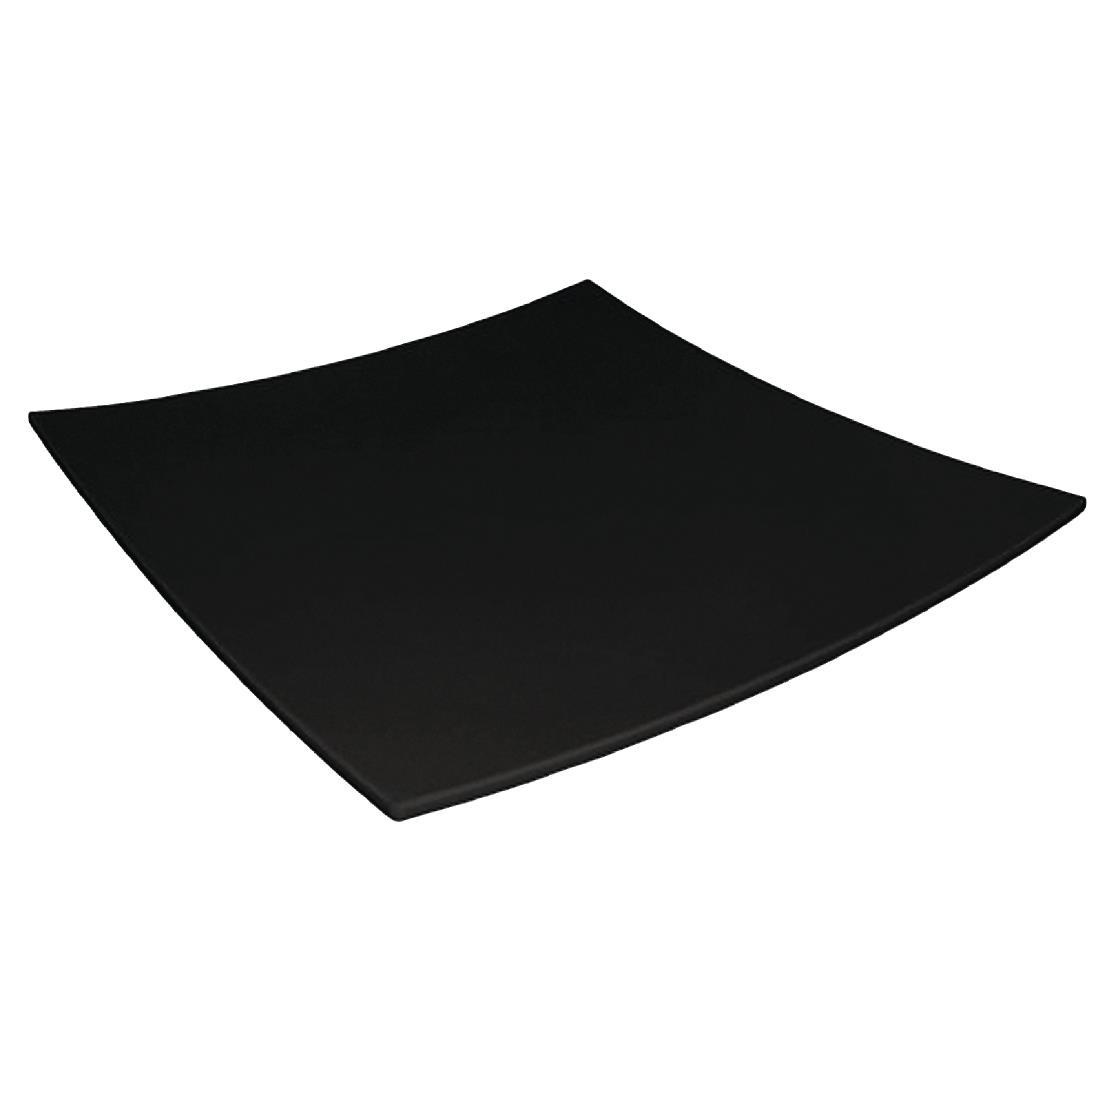 Curved Square Melamine Plate Black 400mm - DP143  - 1